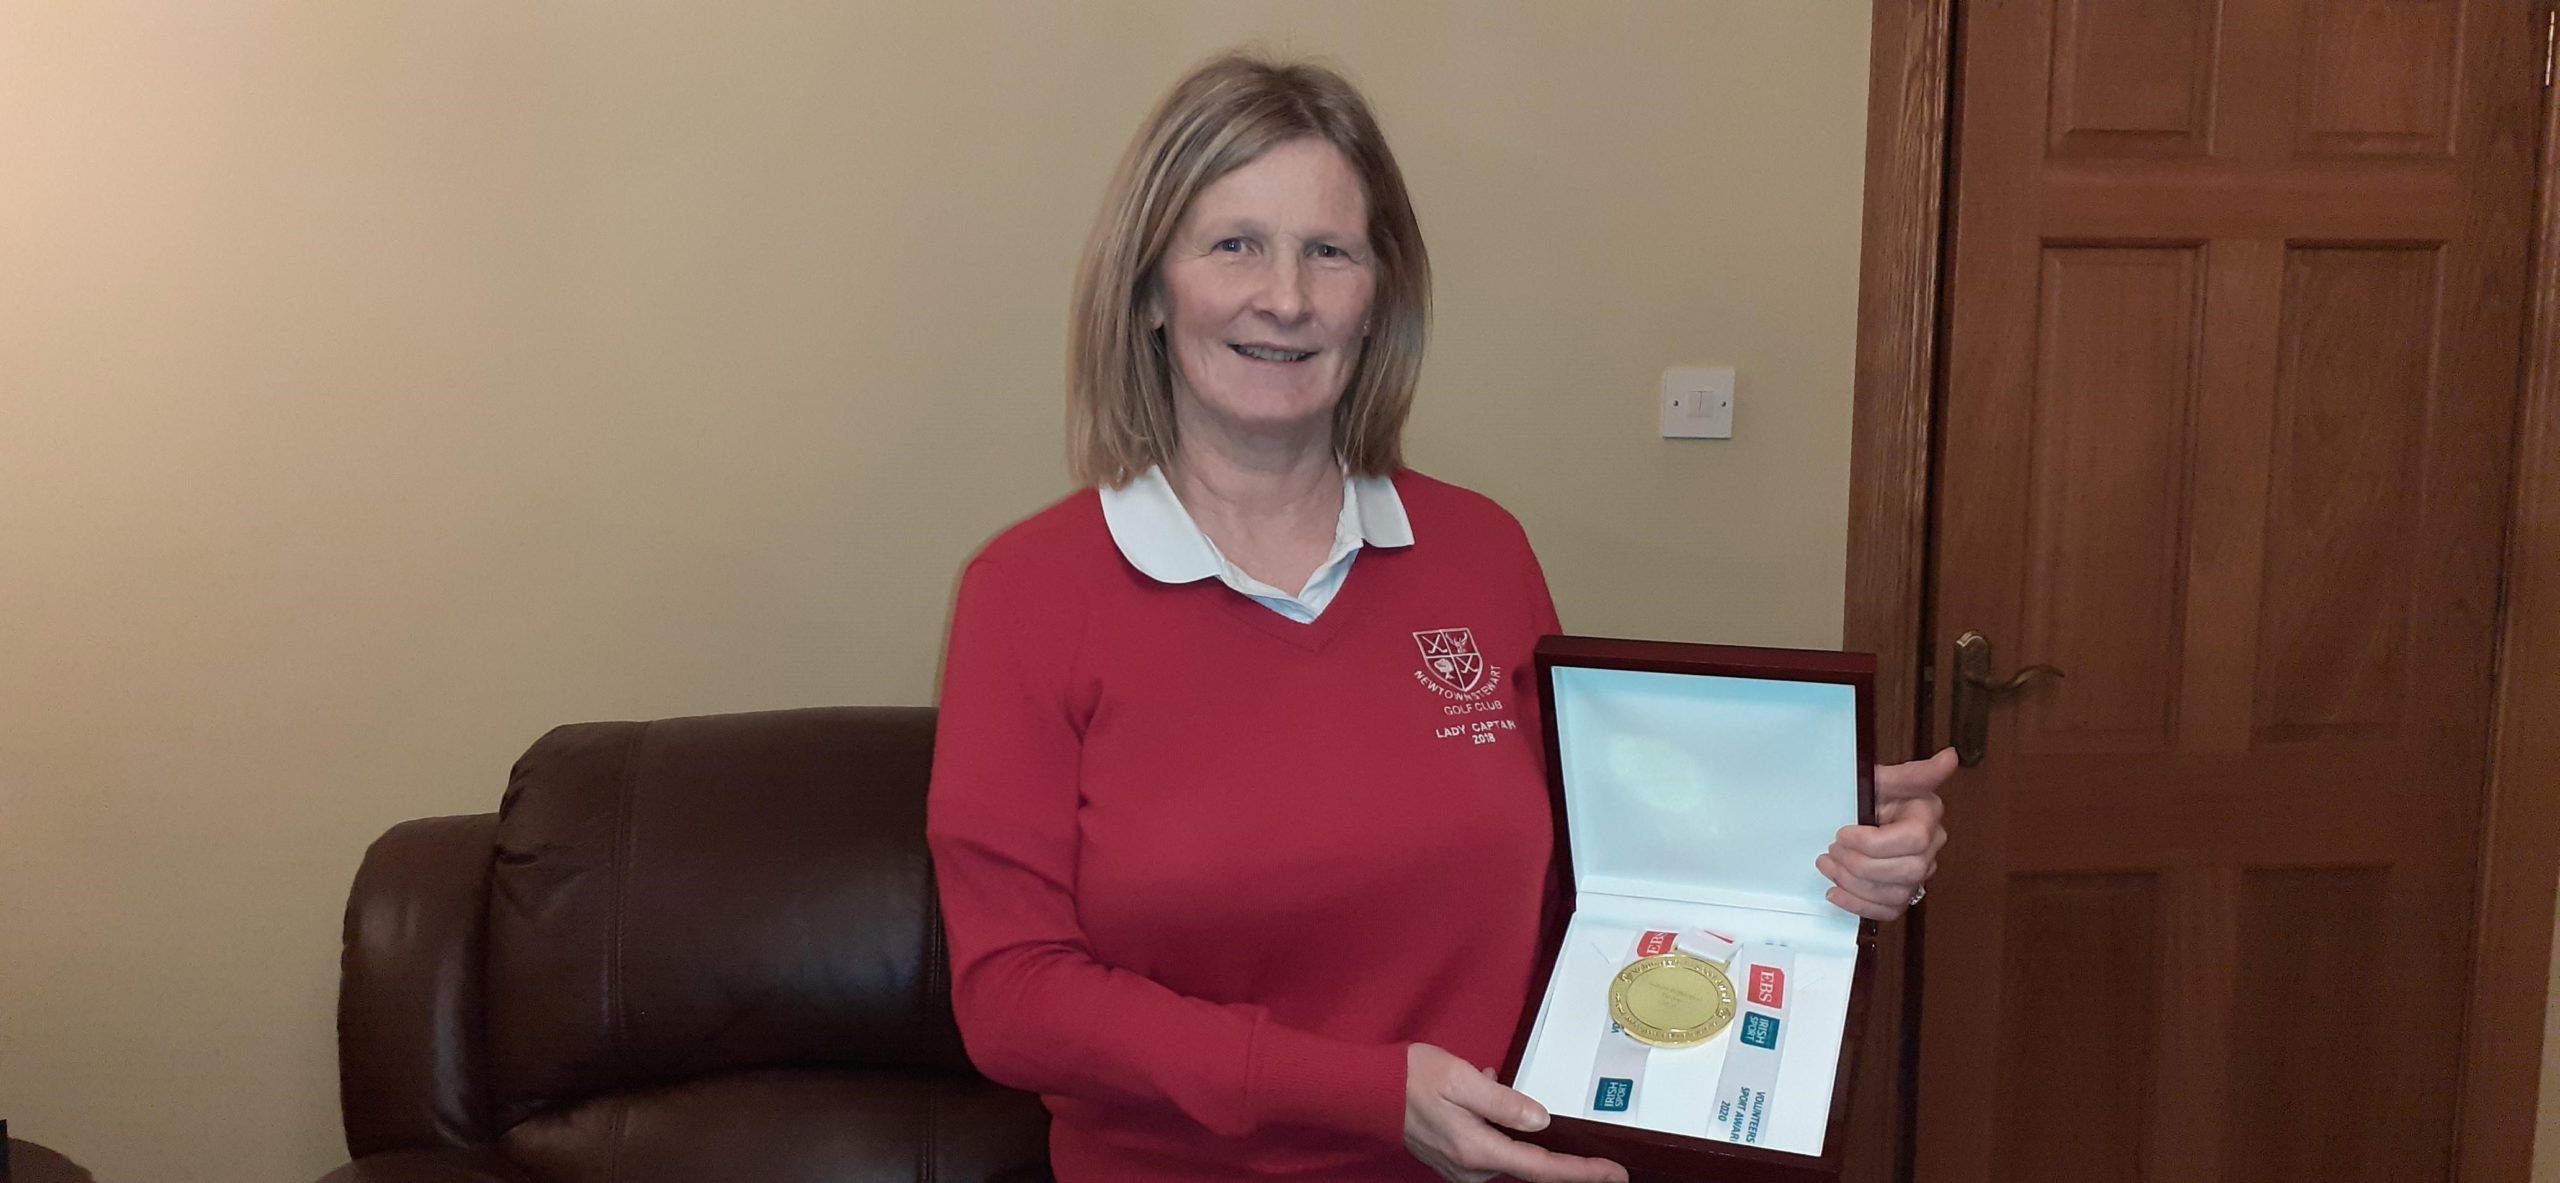 Newtown GC member to receive top volunteer award